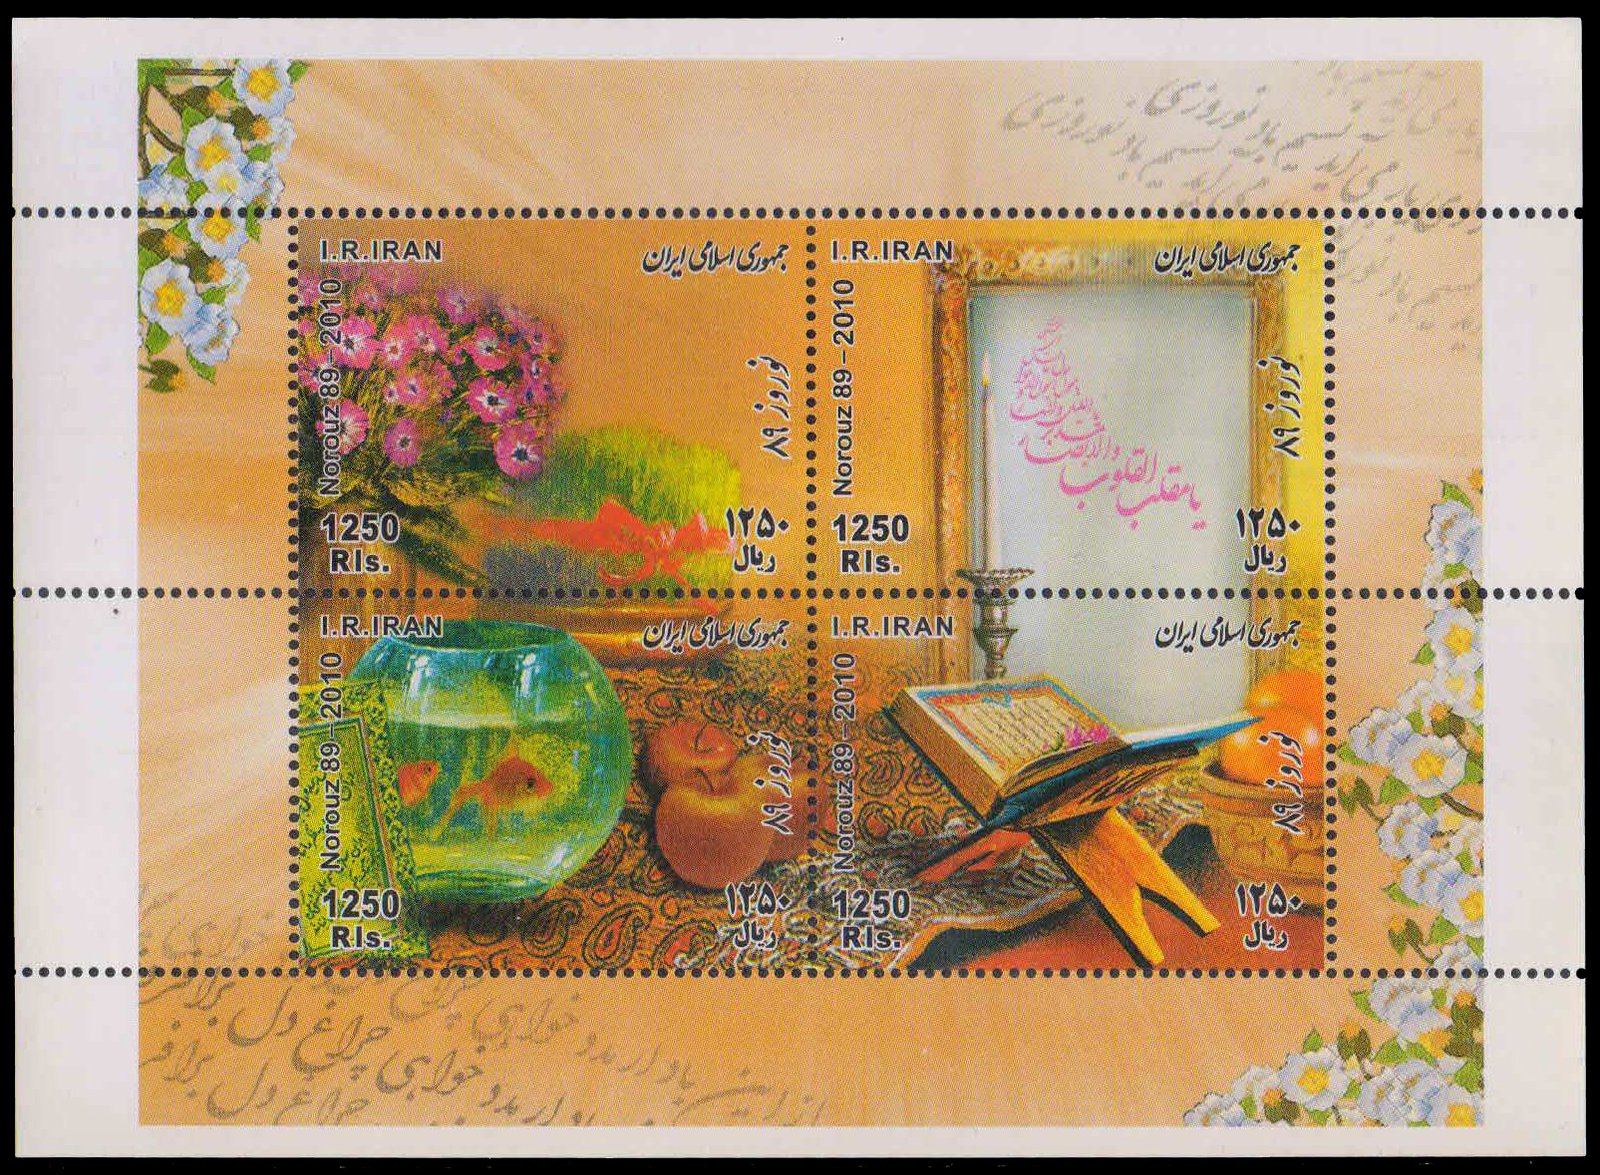 IRAN 2011-New Year, Flowers & Wheat-Koran Gold Fish bowl and Apples, Sheet of 4, MNH, S.G. MS 3312e, Cat � 14-